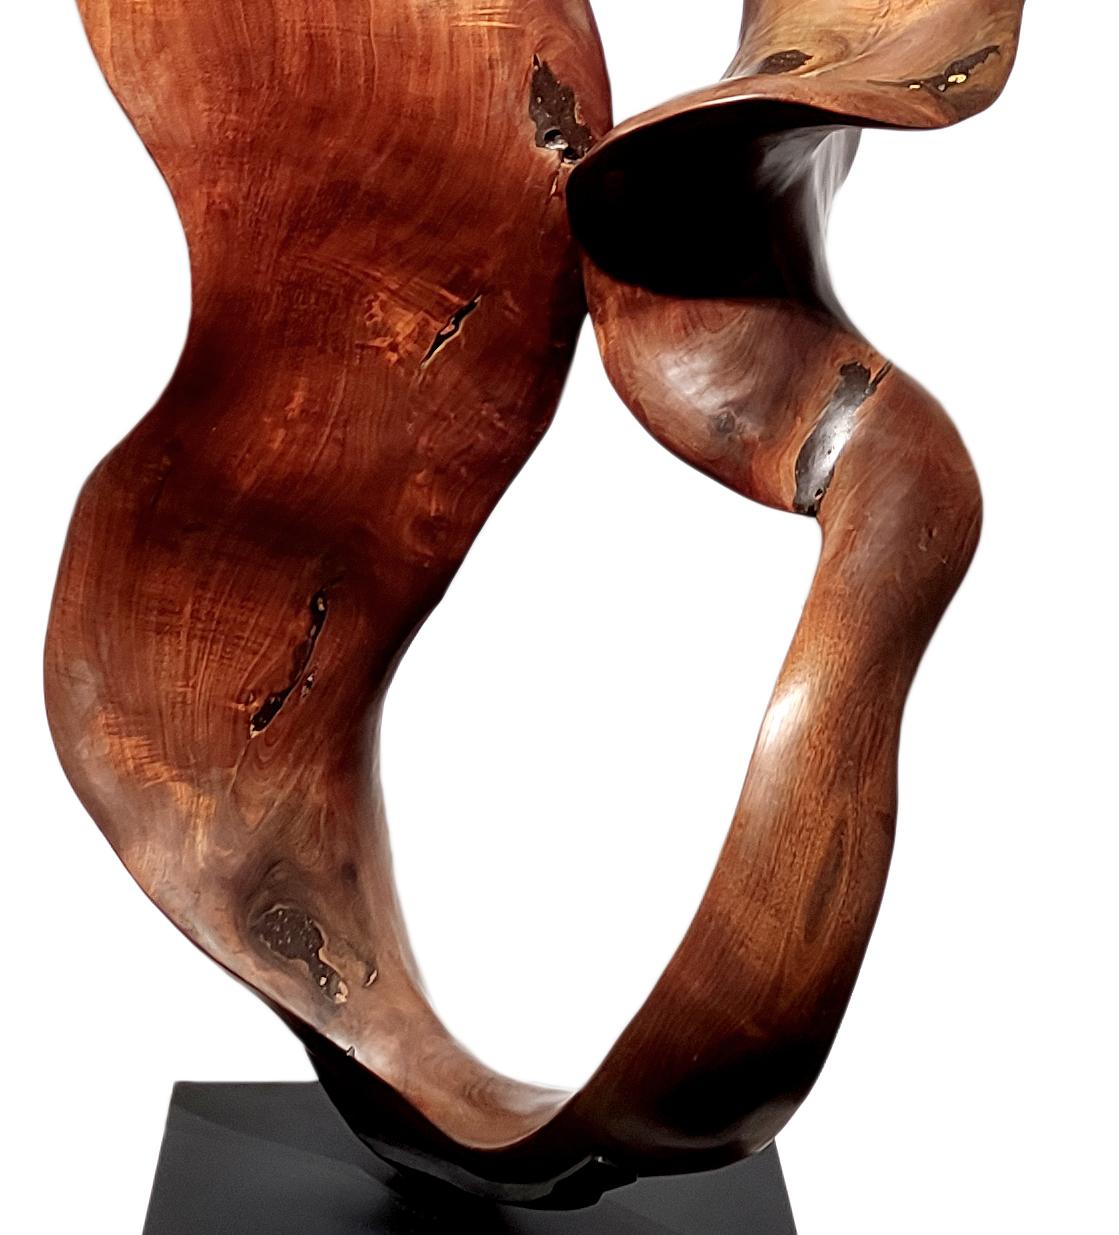 Joy - 21st Century, Contemporary, Abstract Sculpture, Mahogany Root, Wood 4